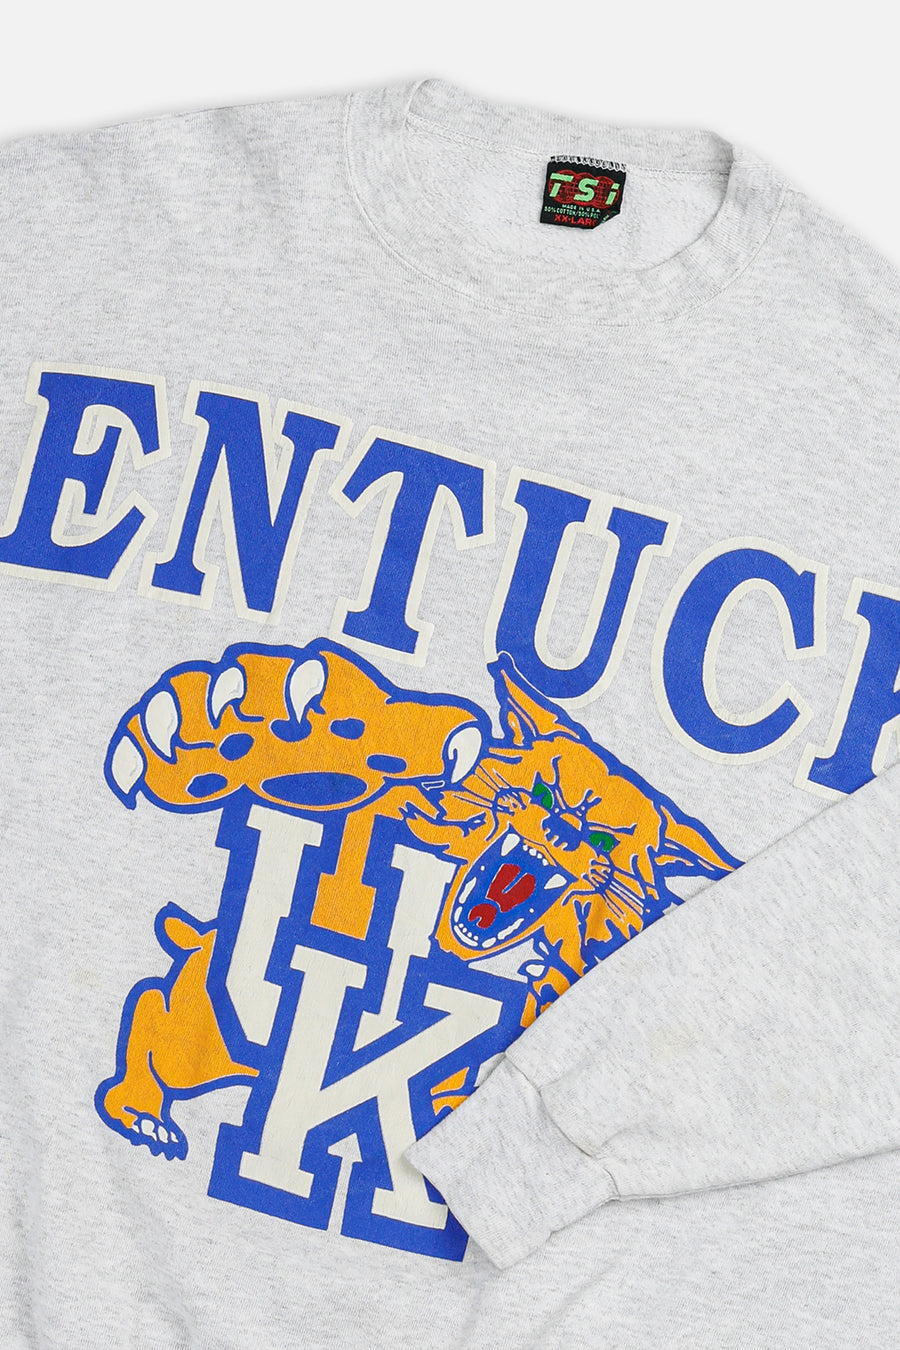 Vintage Kentucky University Sweatshirt - XXL